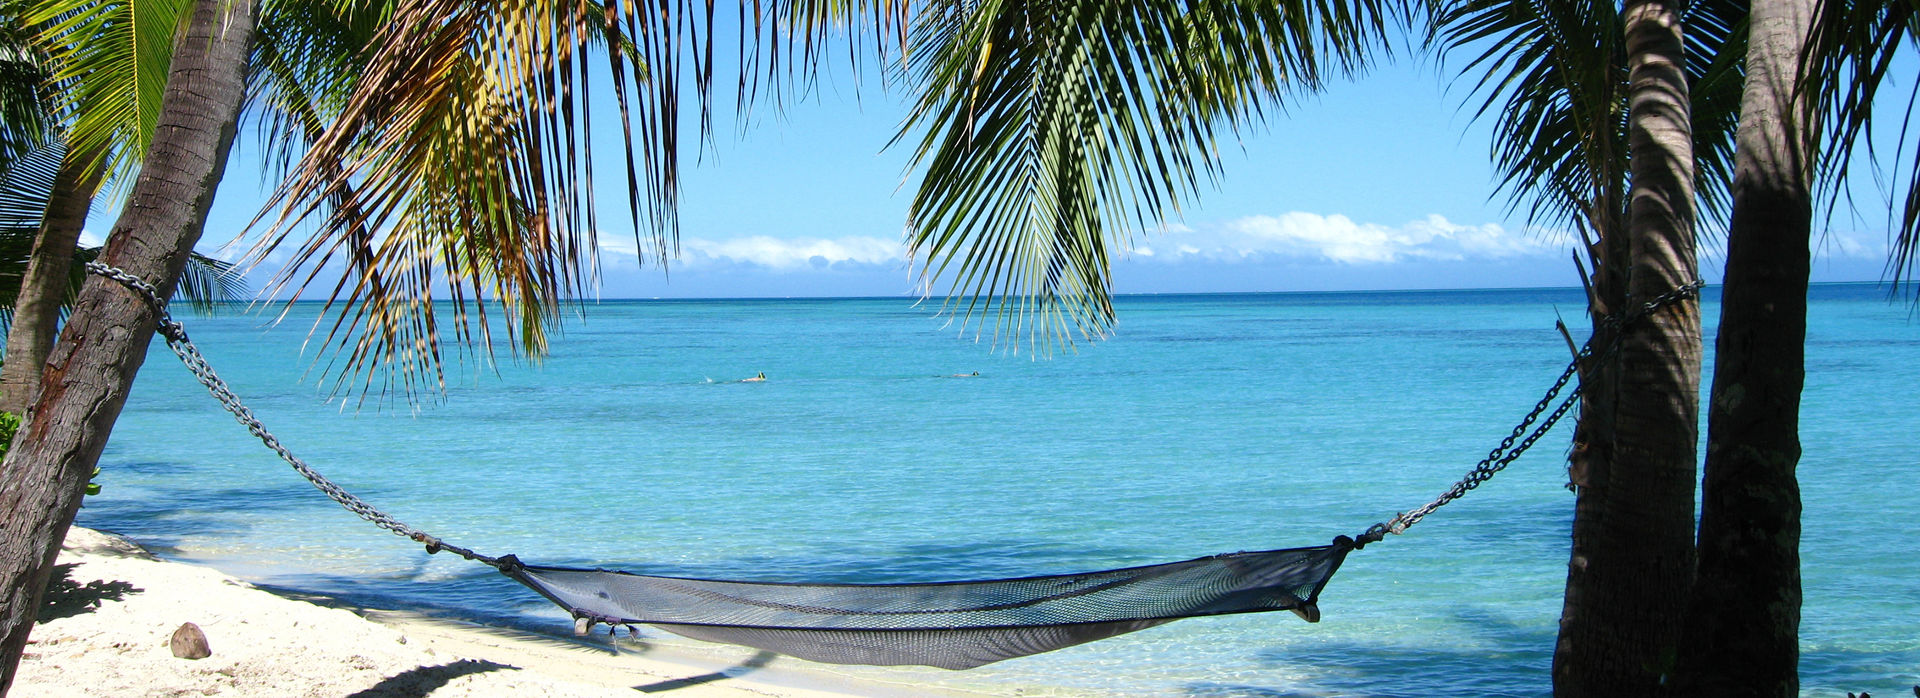 Top 7 things to do in Fiji